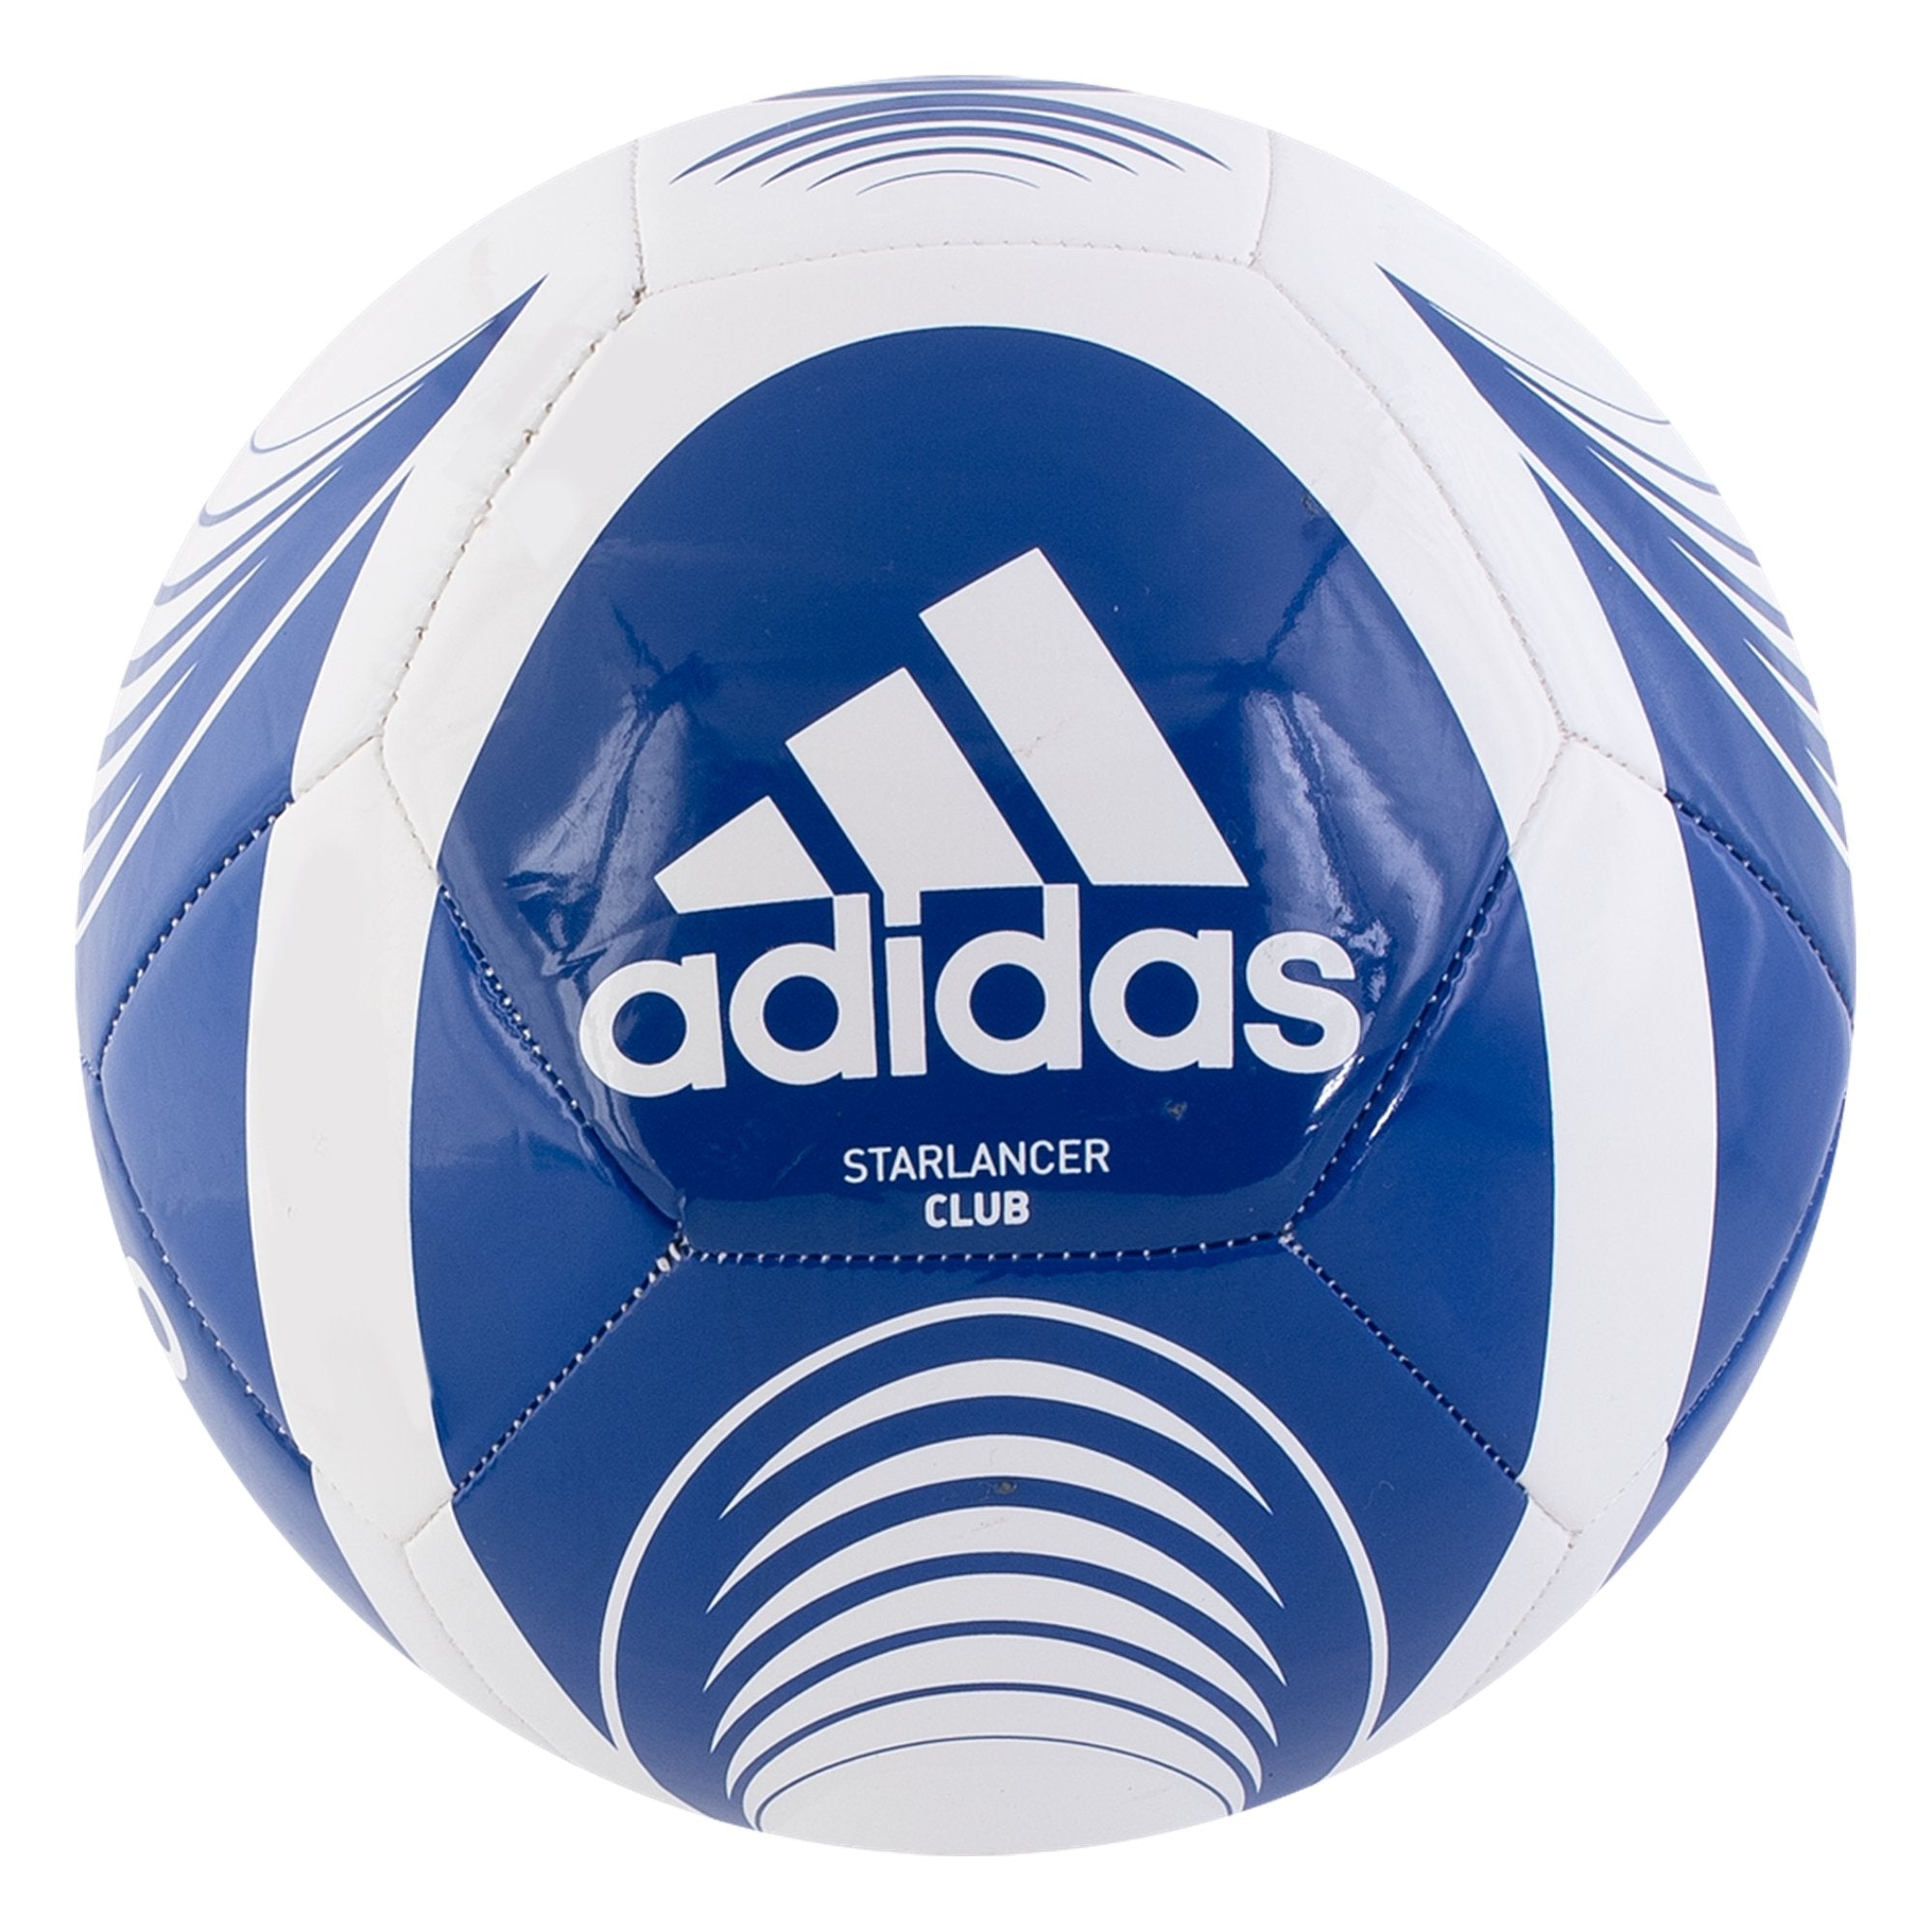 Adidas Starlancer Club Soccer Ball Blue